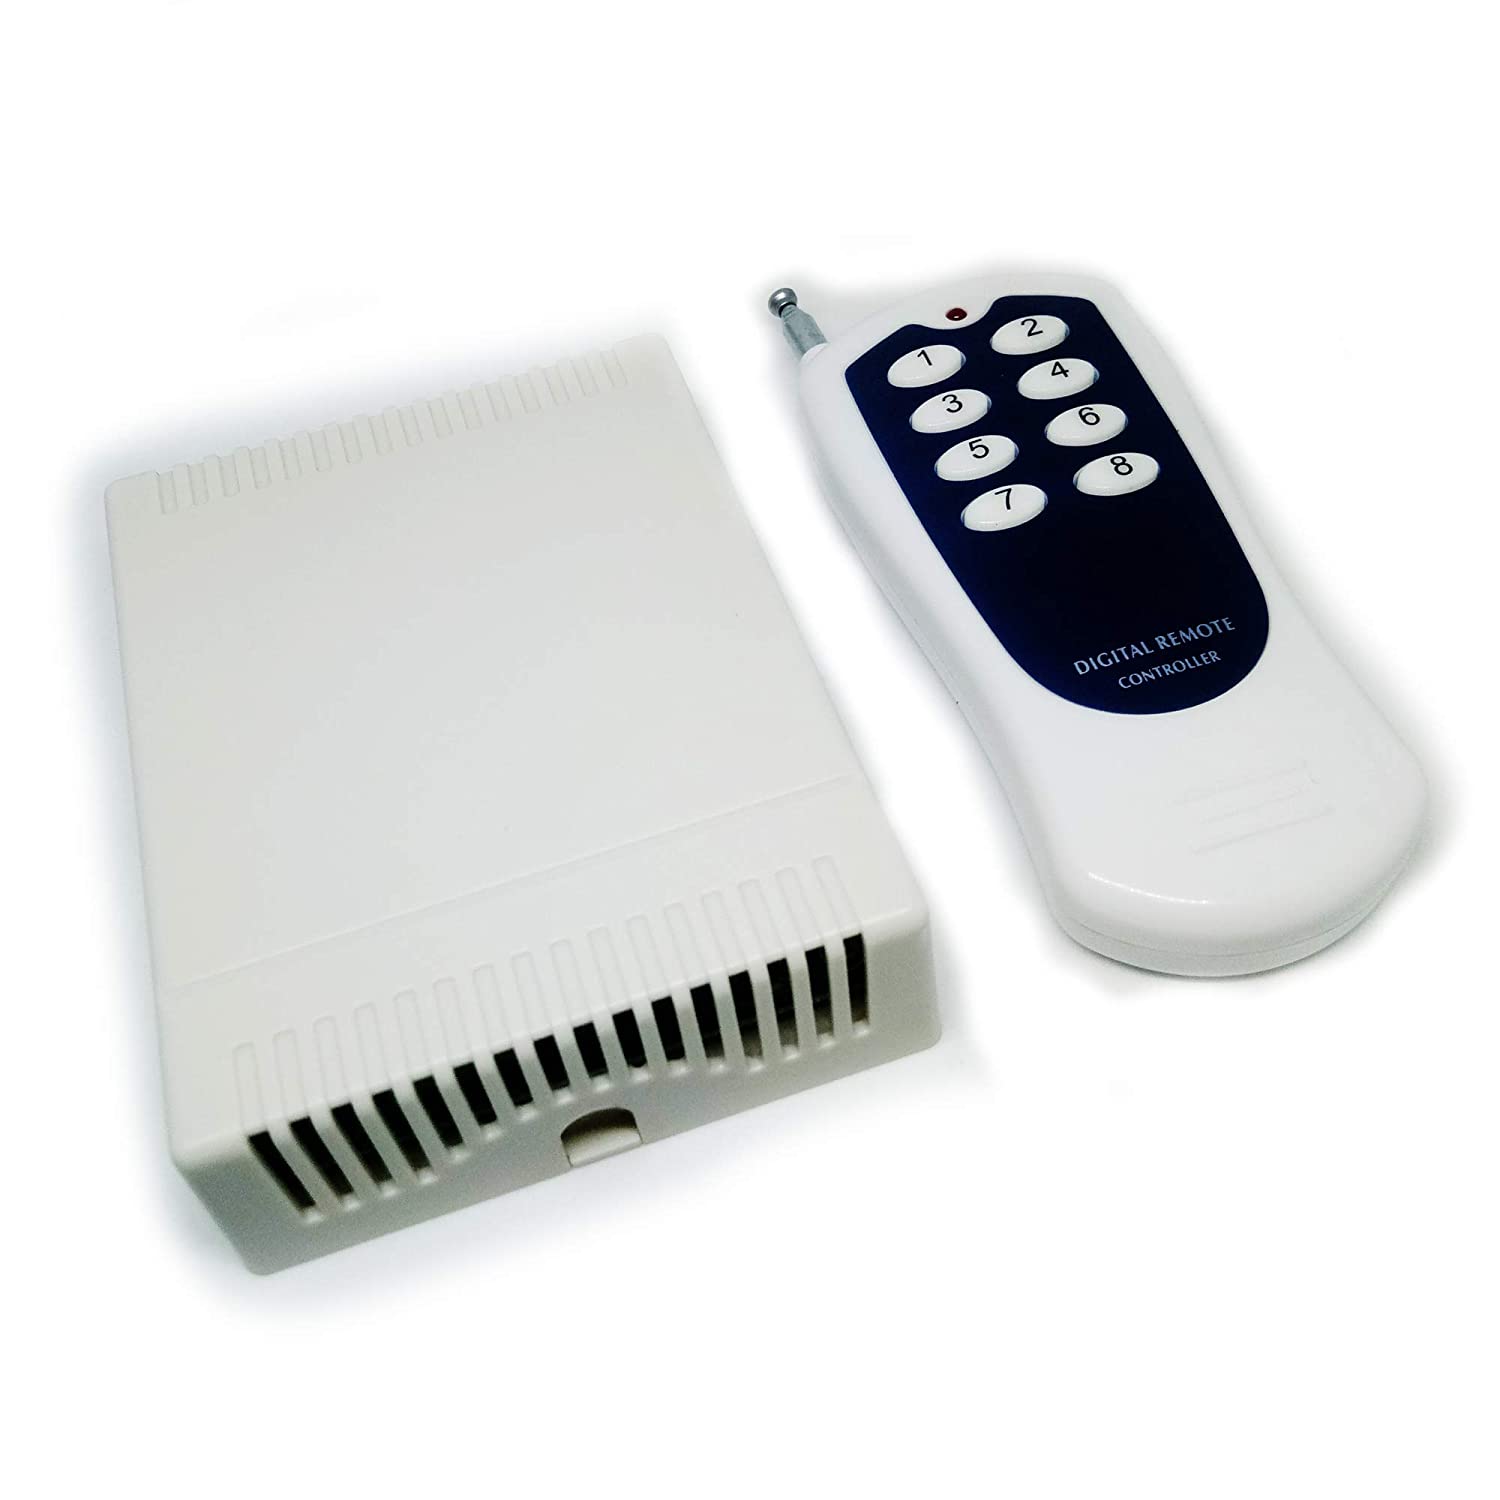 8Ch 12V 10A RF Wireless Remote Control Switch Relay Module | RF Transmitter + Receiver